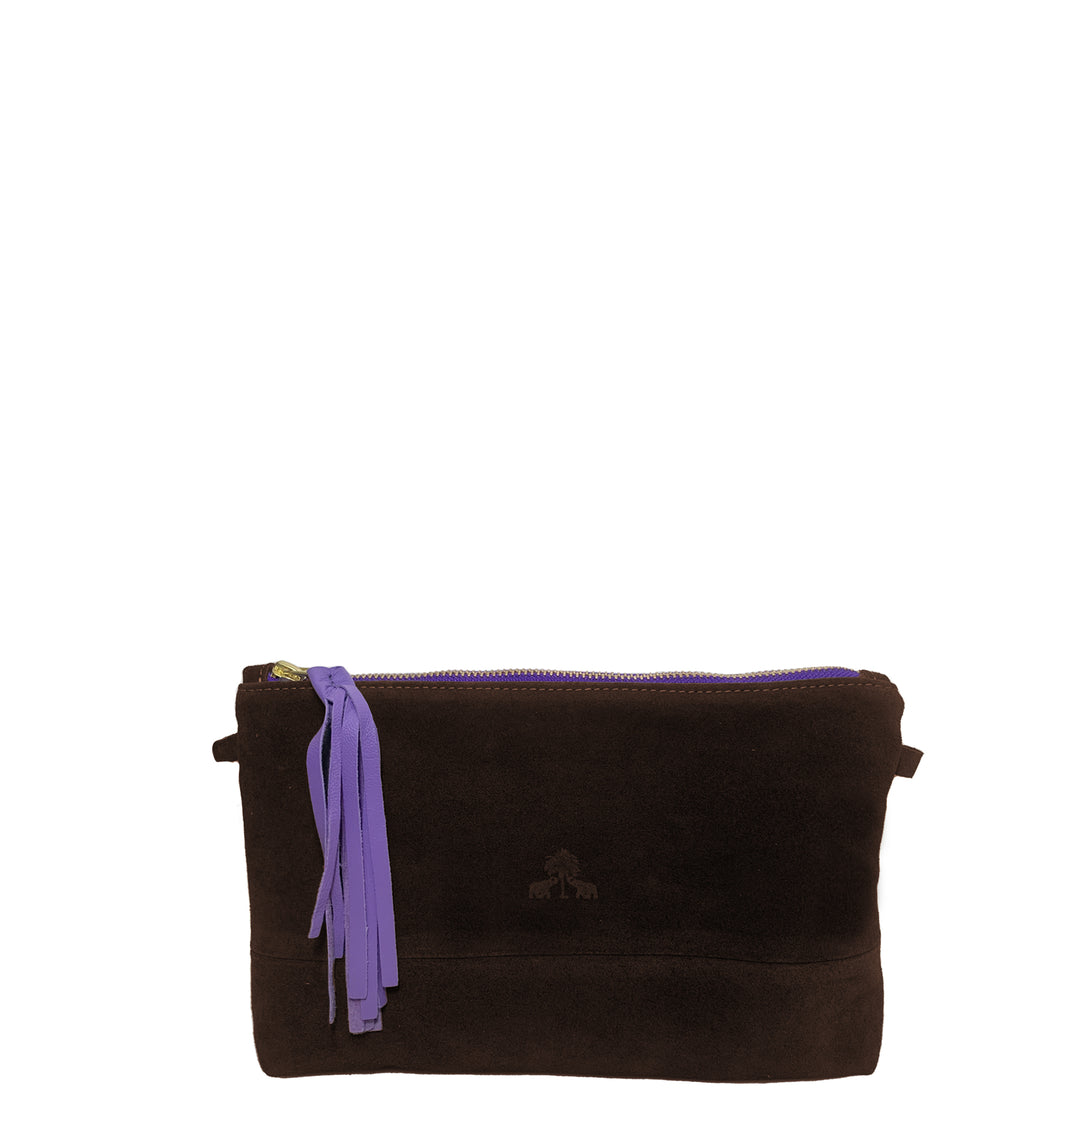 Clutch Bag CLARA -braun & lila-